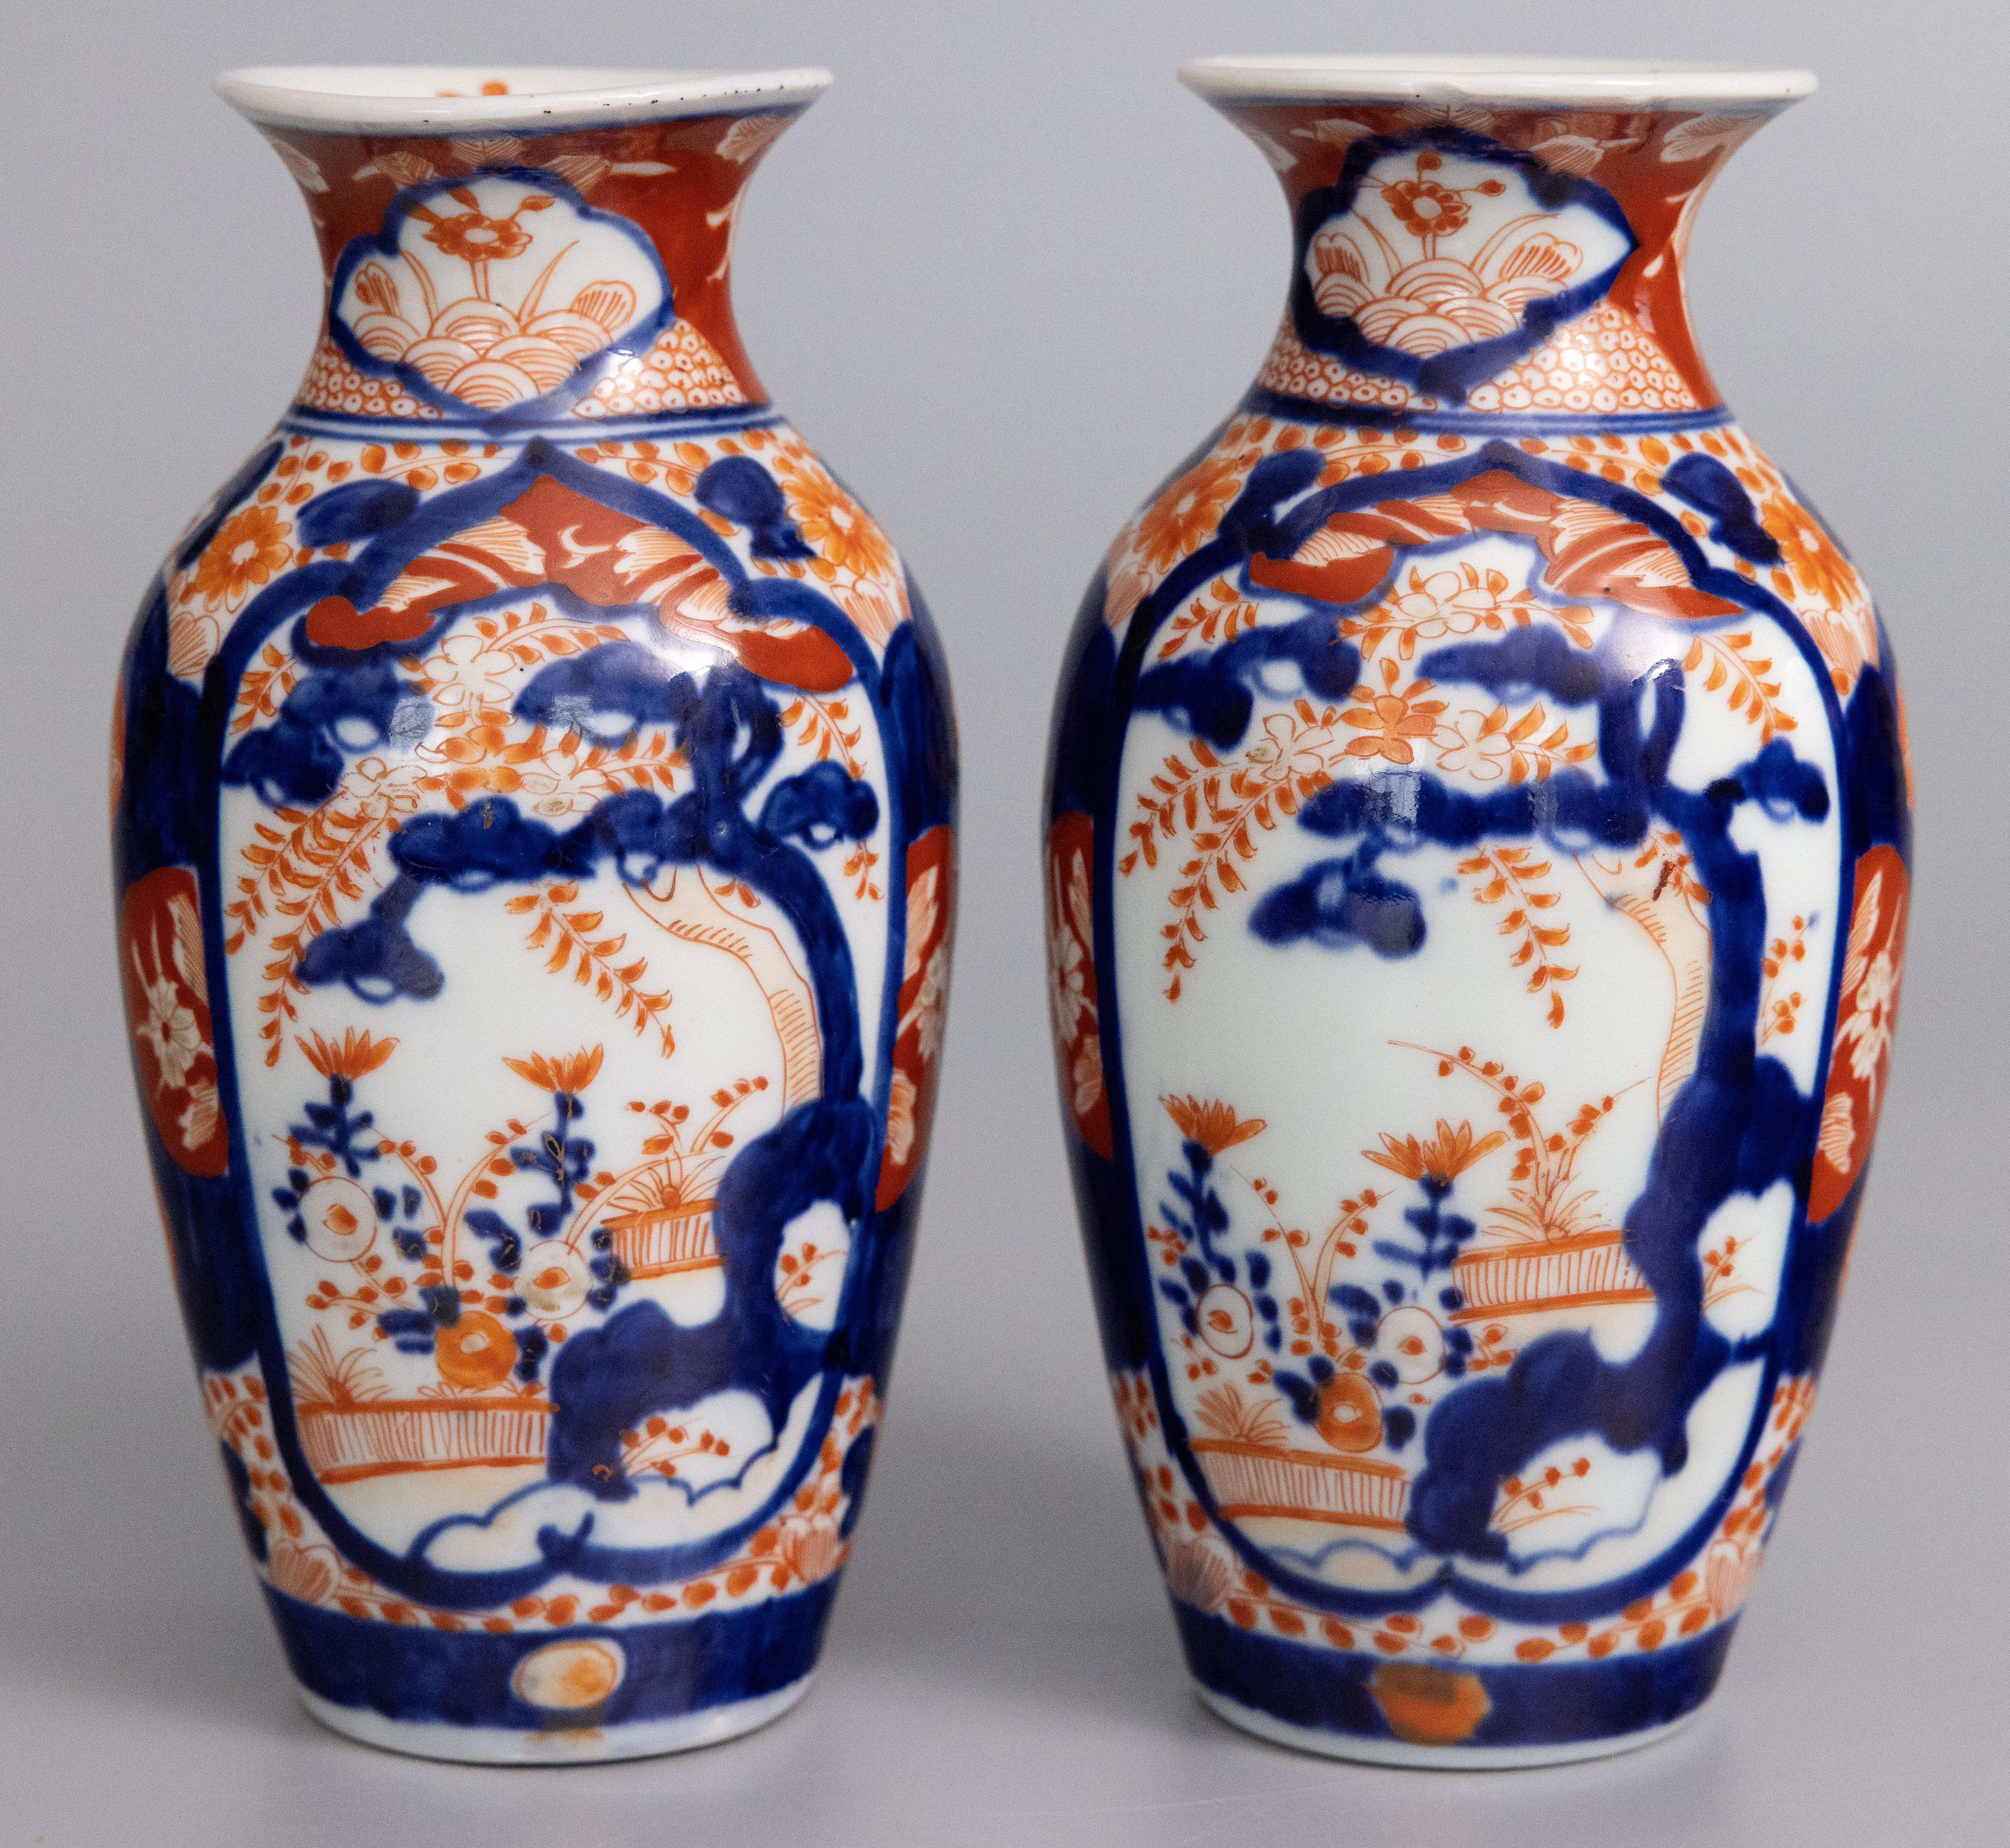 Japonisme Antique 19th Century Japanese Imari Porcelain Vases - a Pair